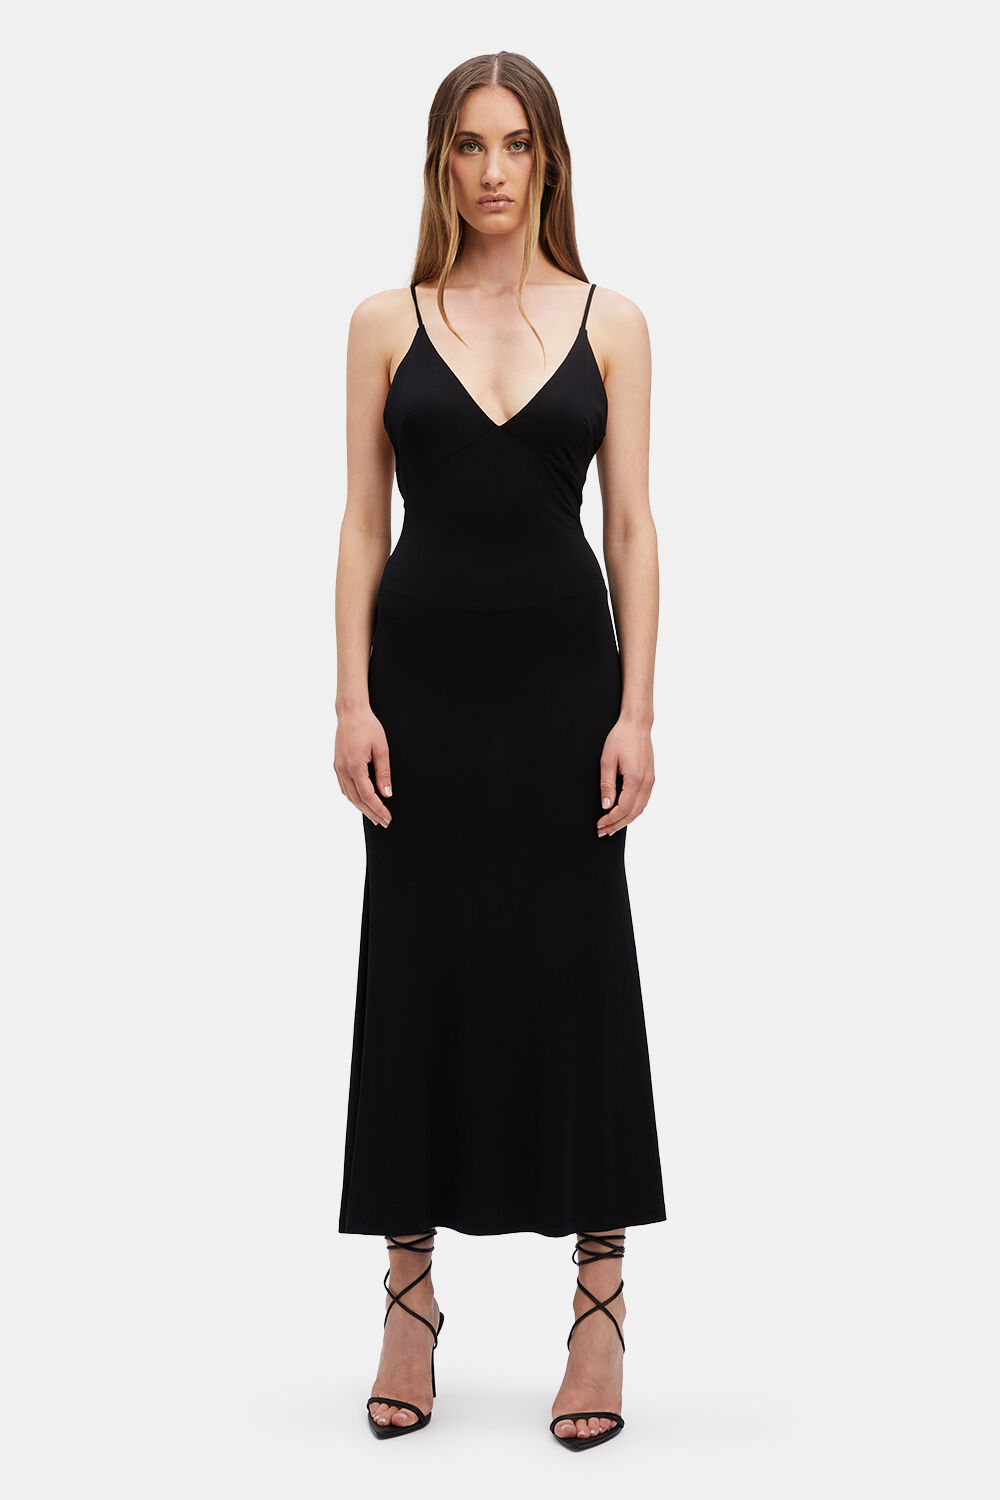 Victoire Diamonte Dress in Black | Bardot